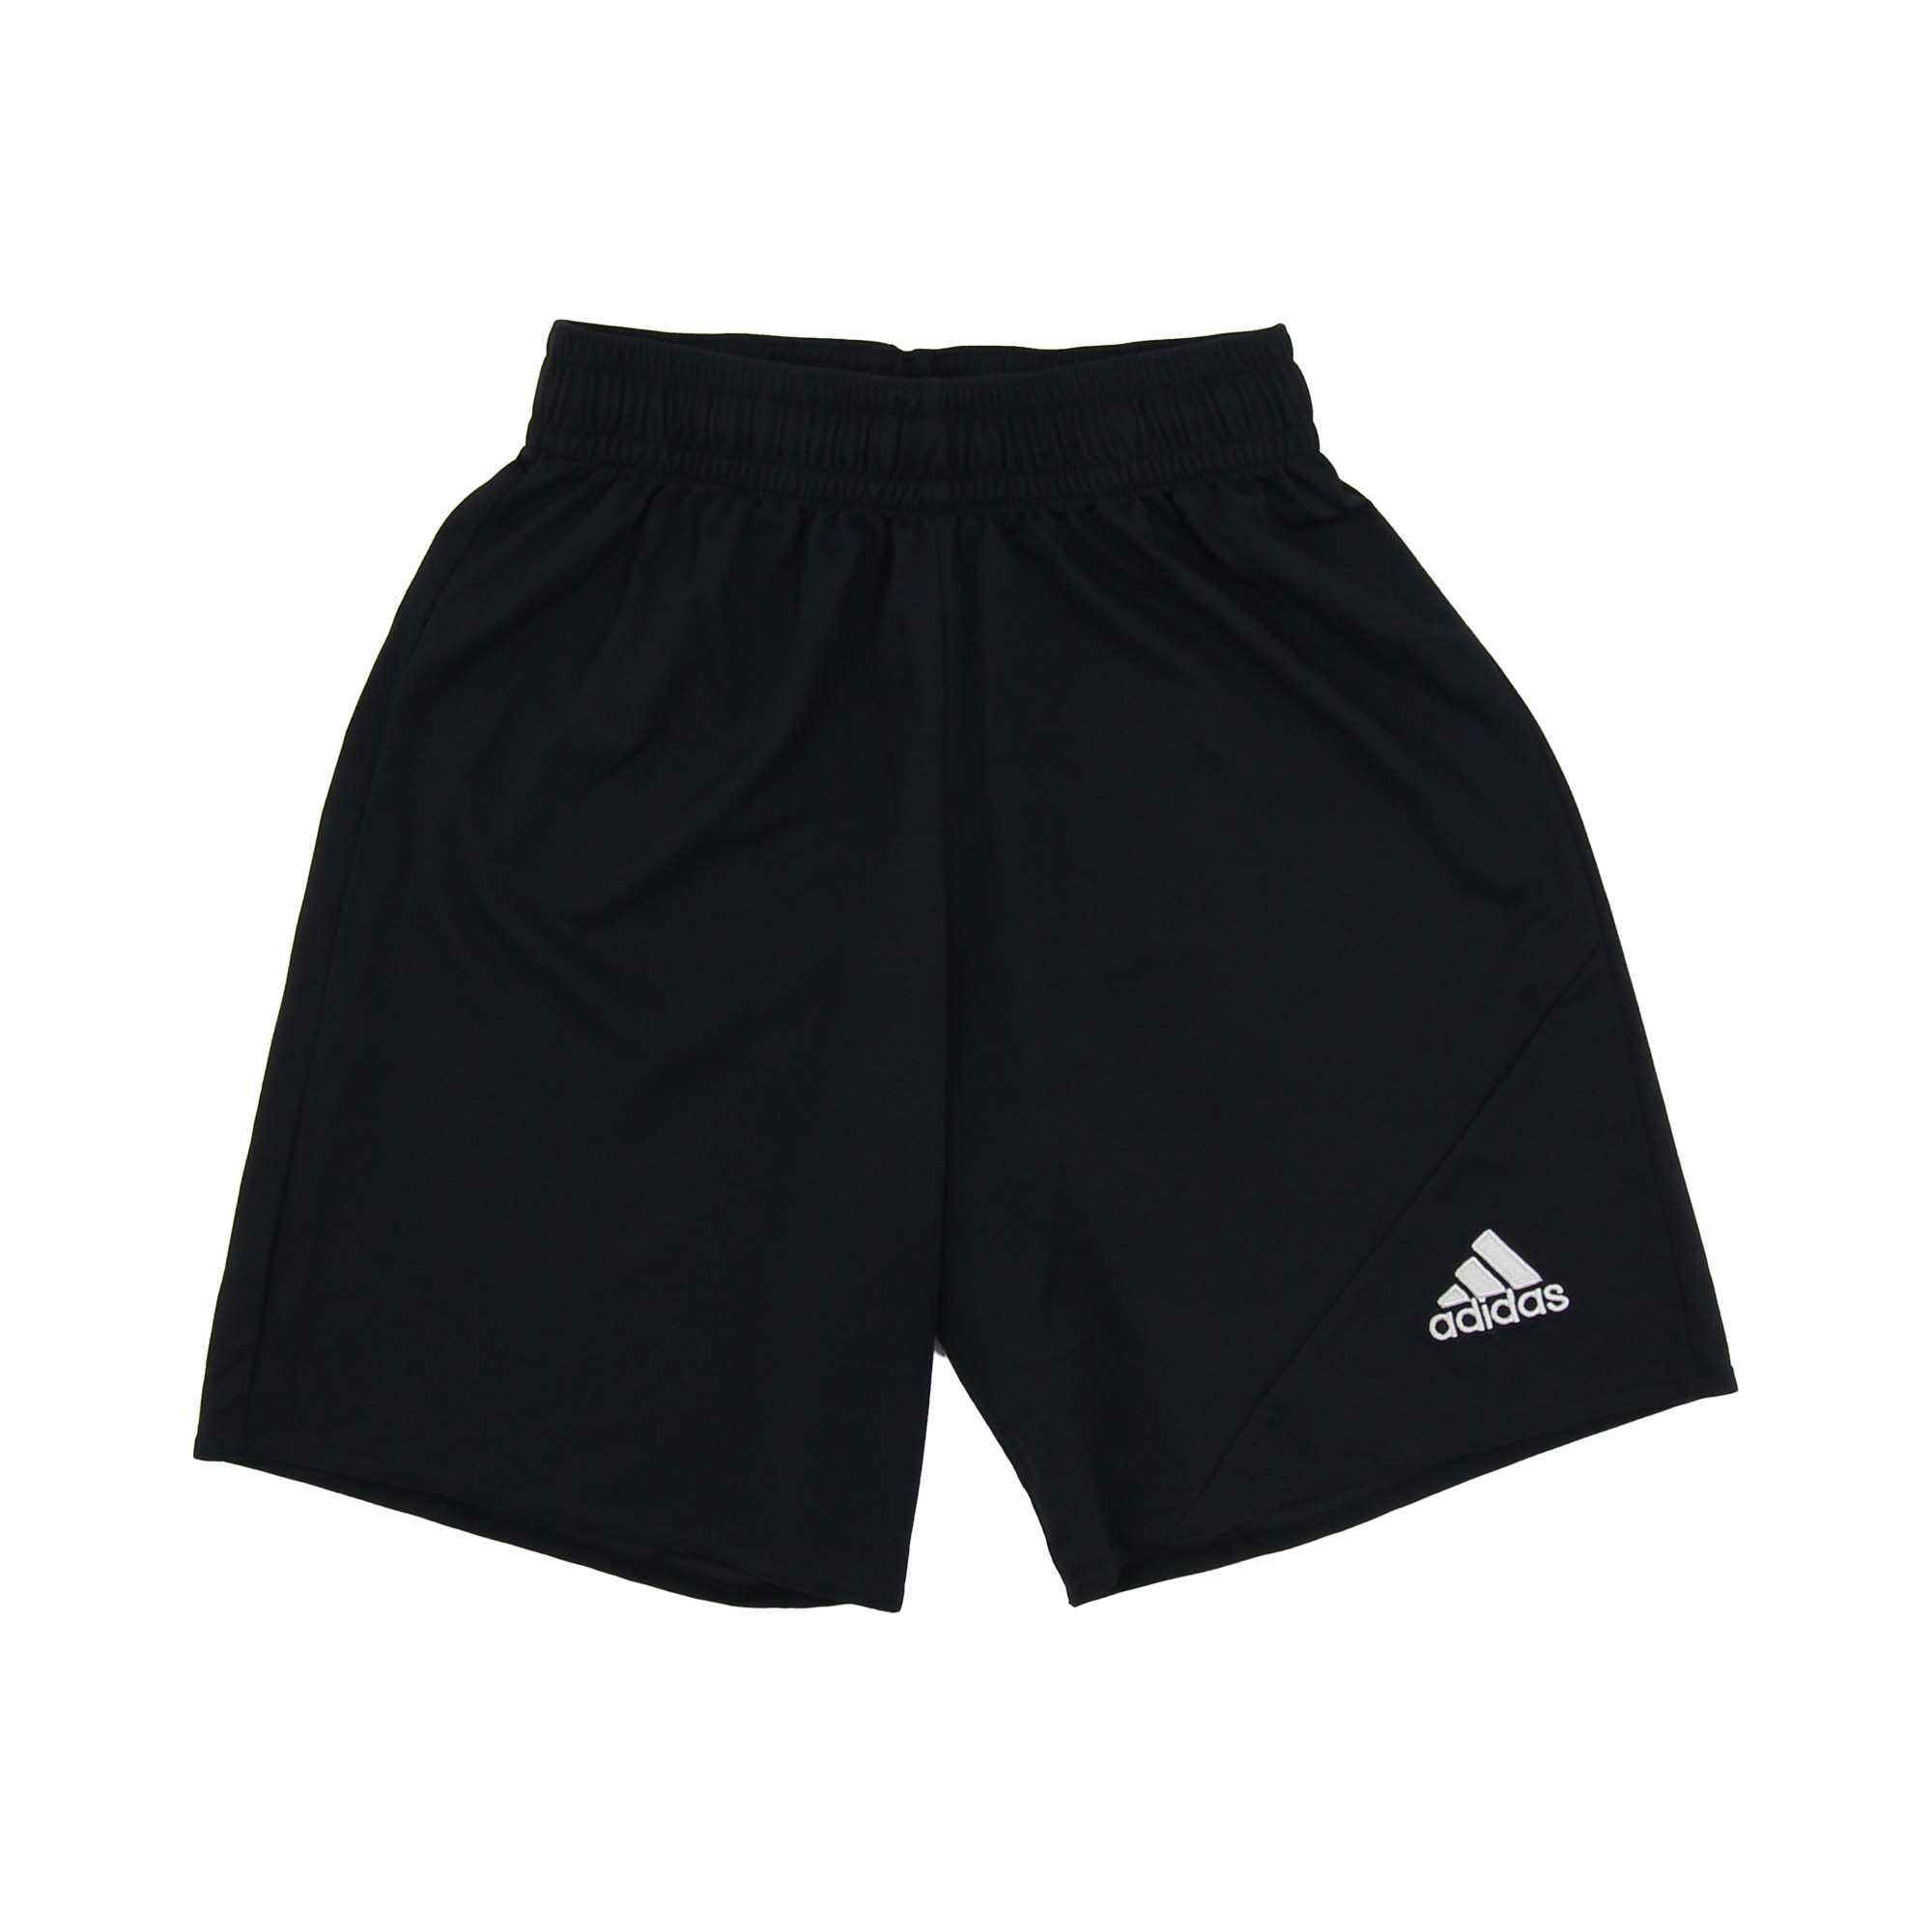 Adidas Embroidered Logo Shorts - XS